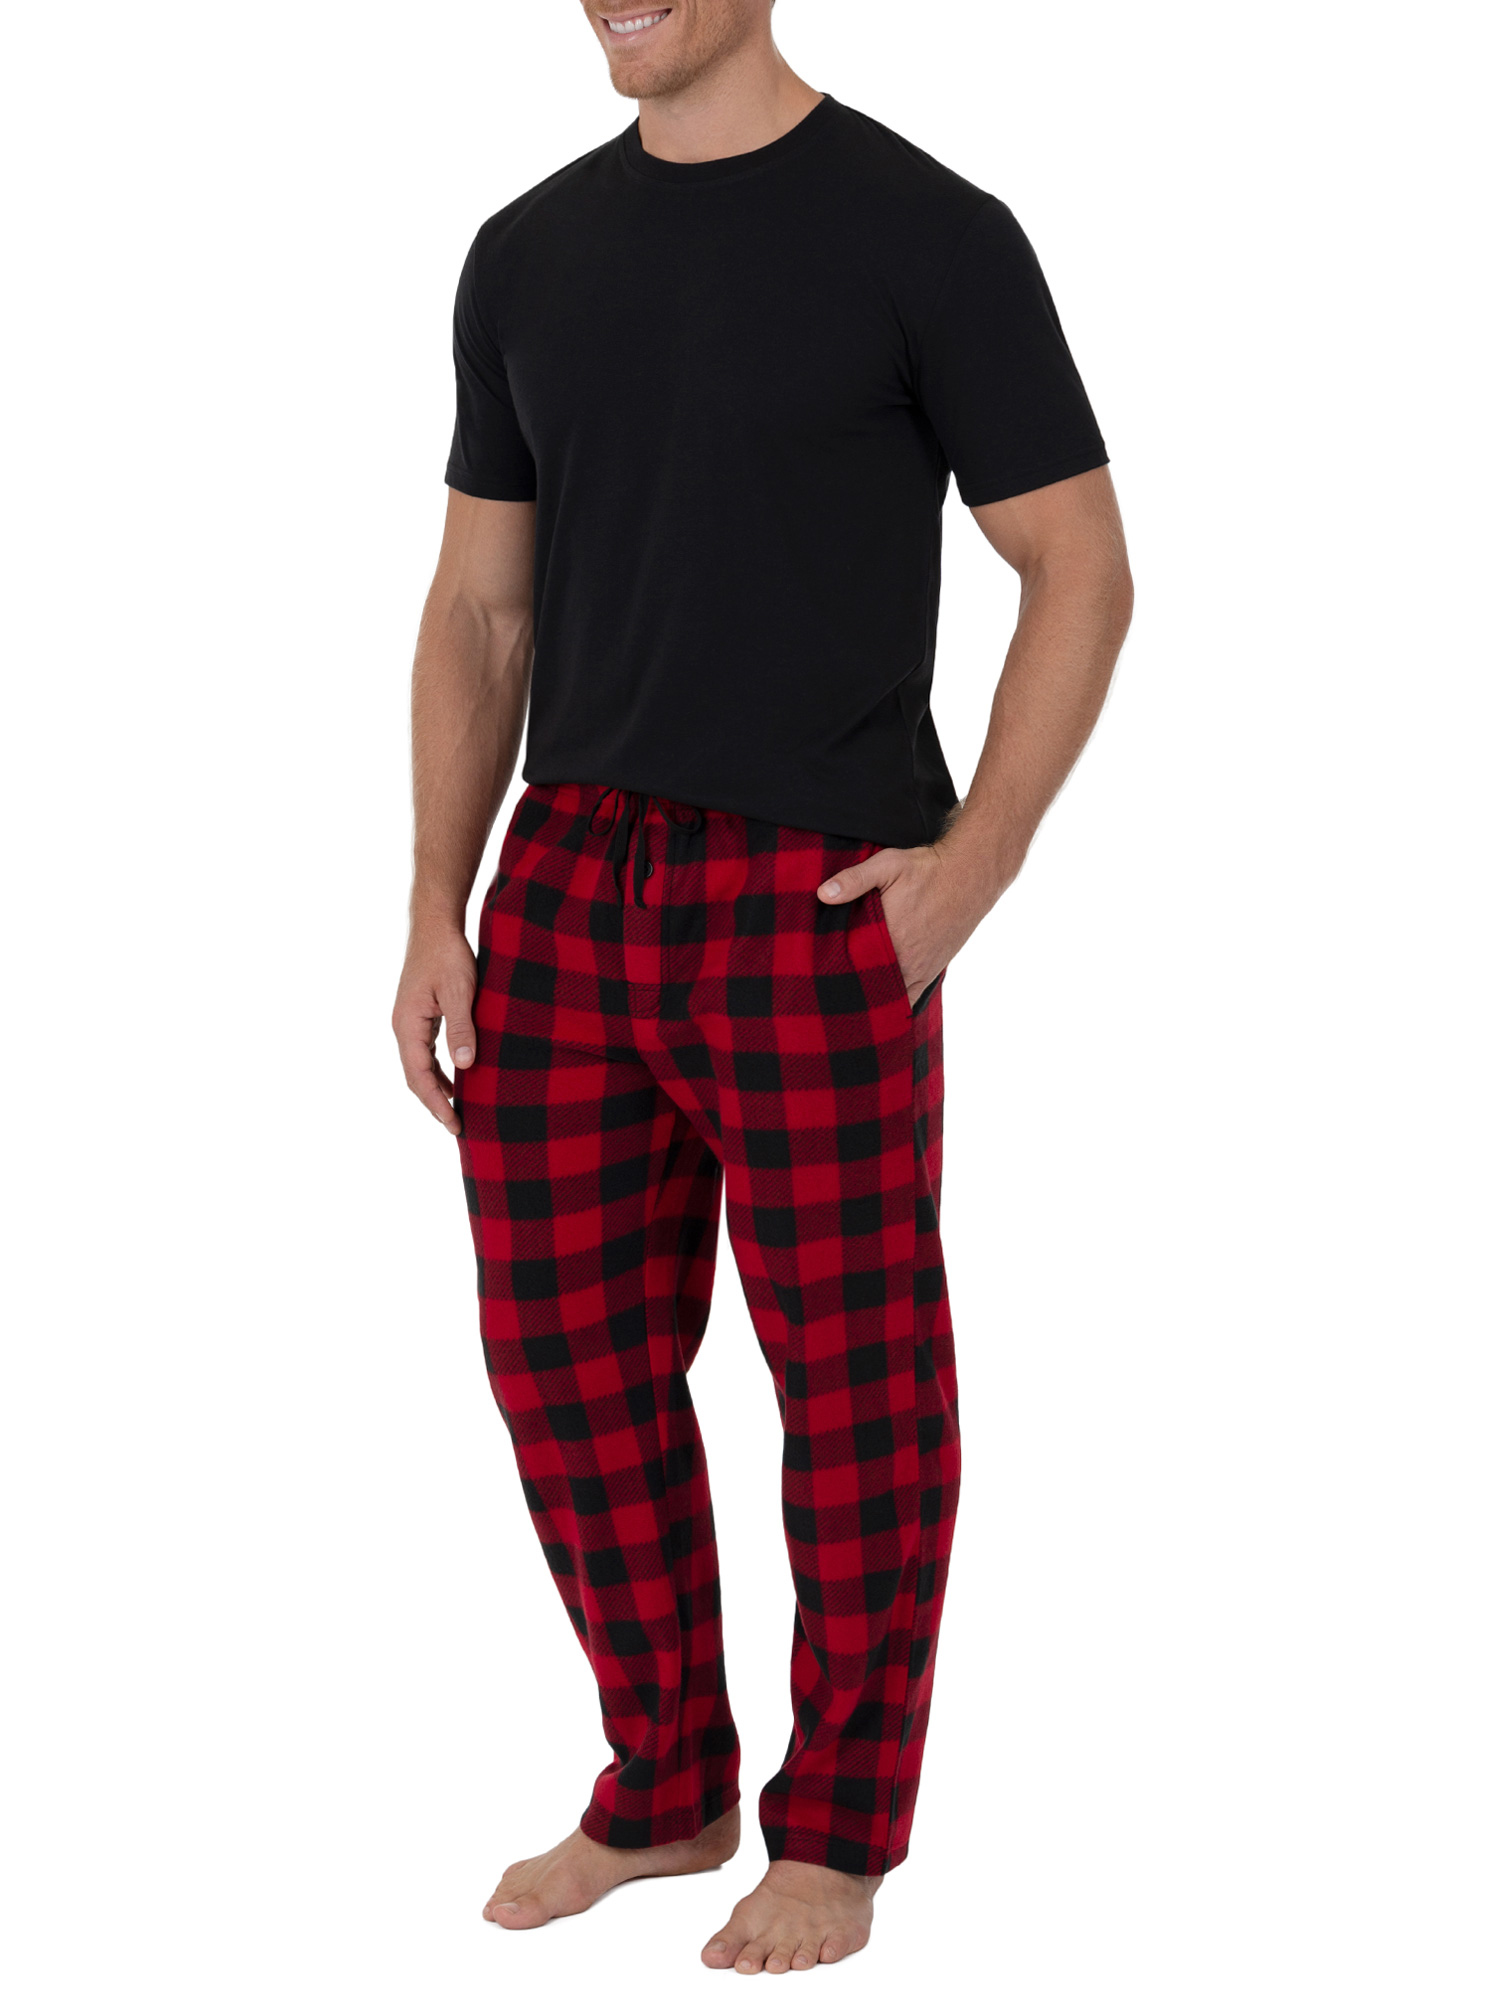 Fruit Of The Loom Men’s Short Sleeve Crewneck Top and Fleece Pajama Pants Set - image 3 of 5